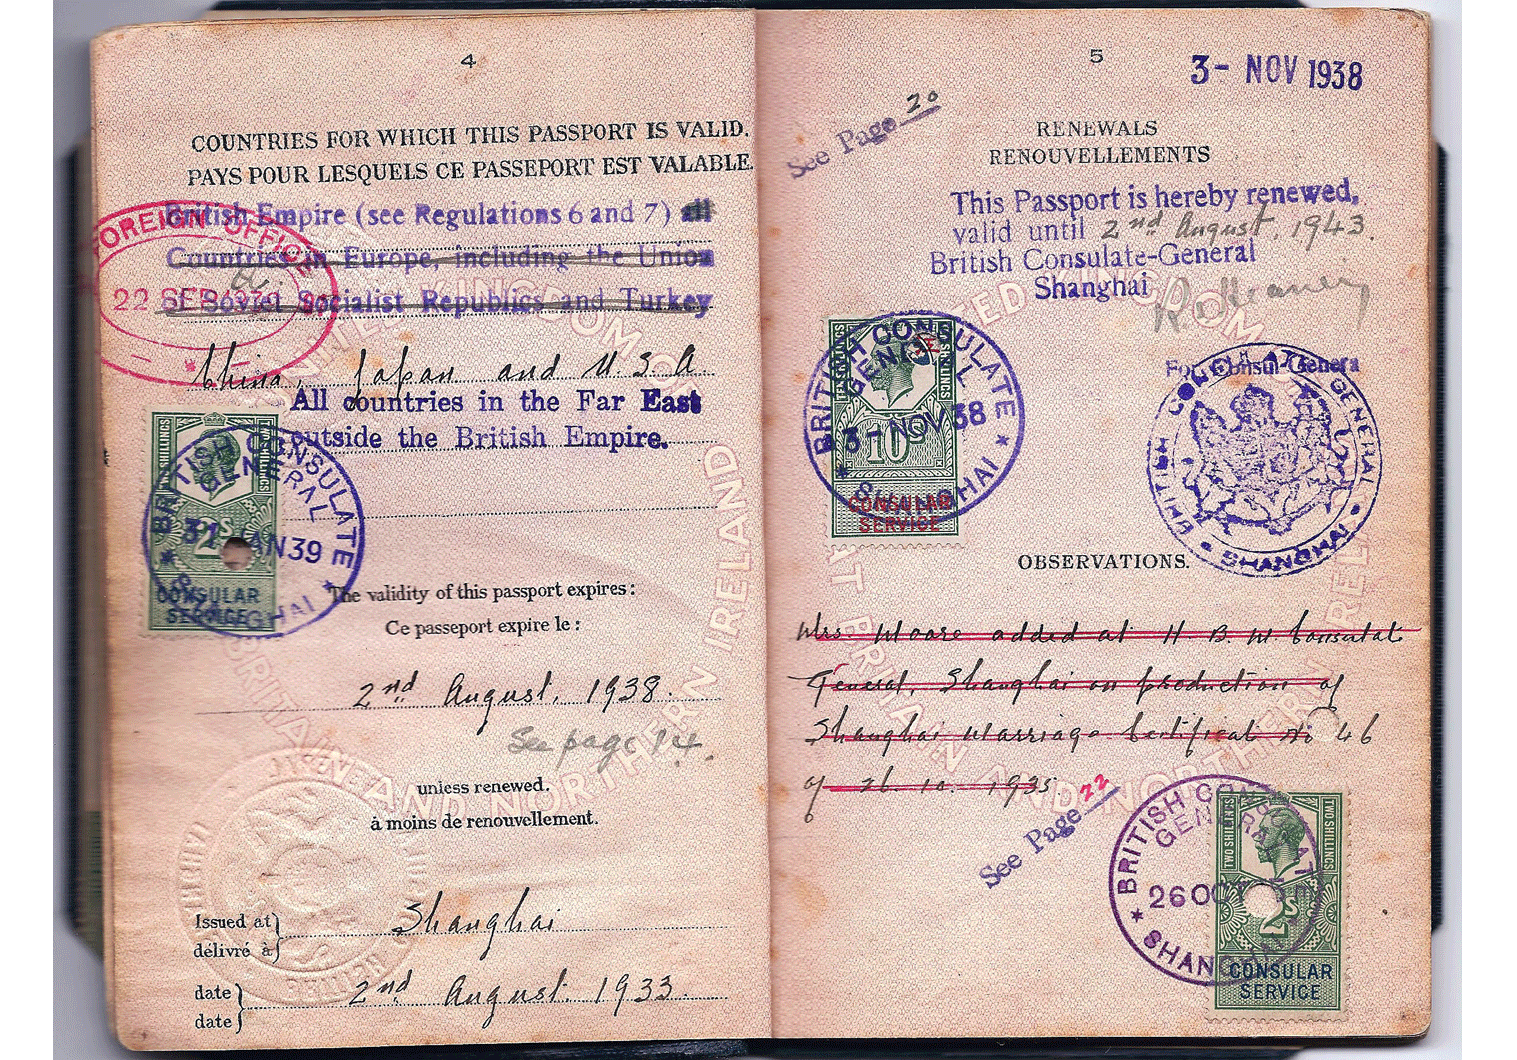 WW2 passport